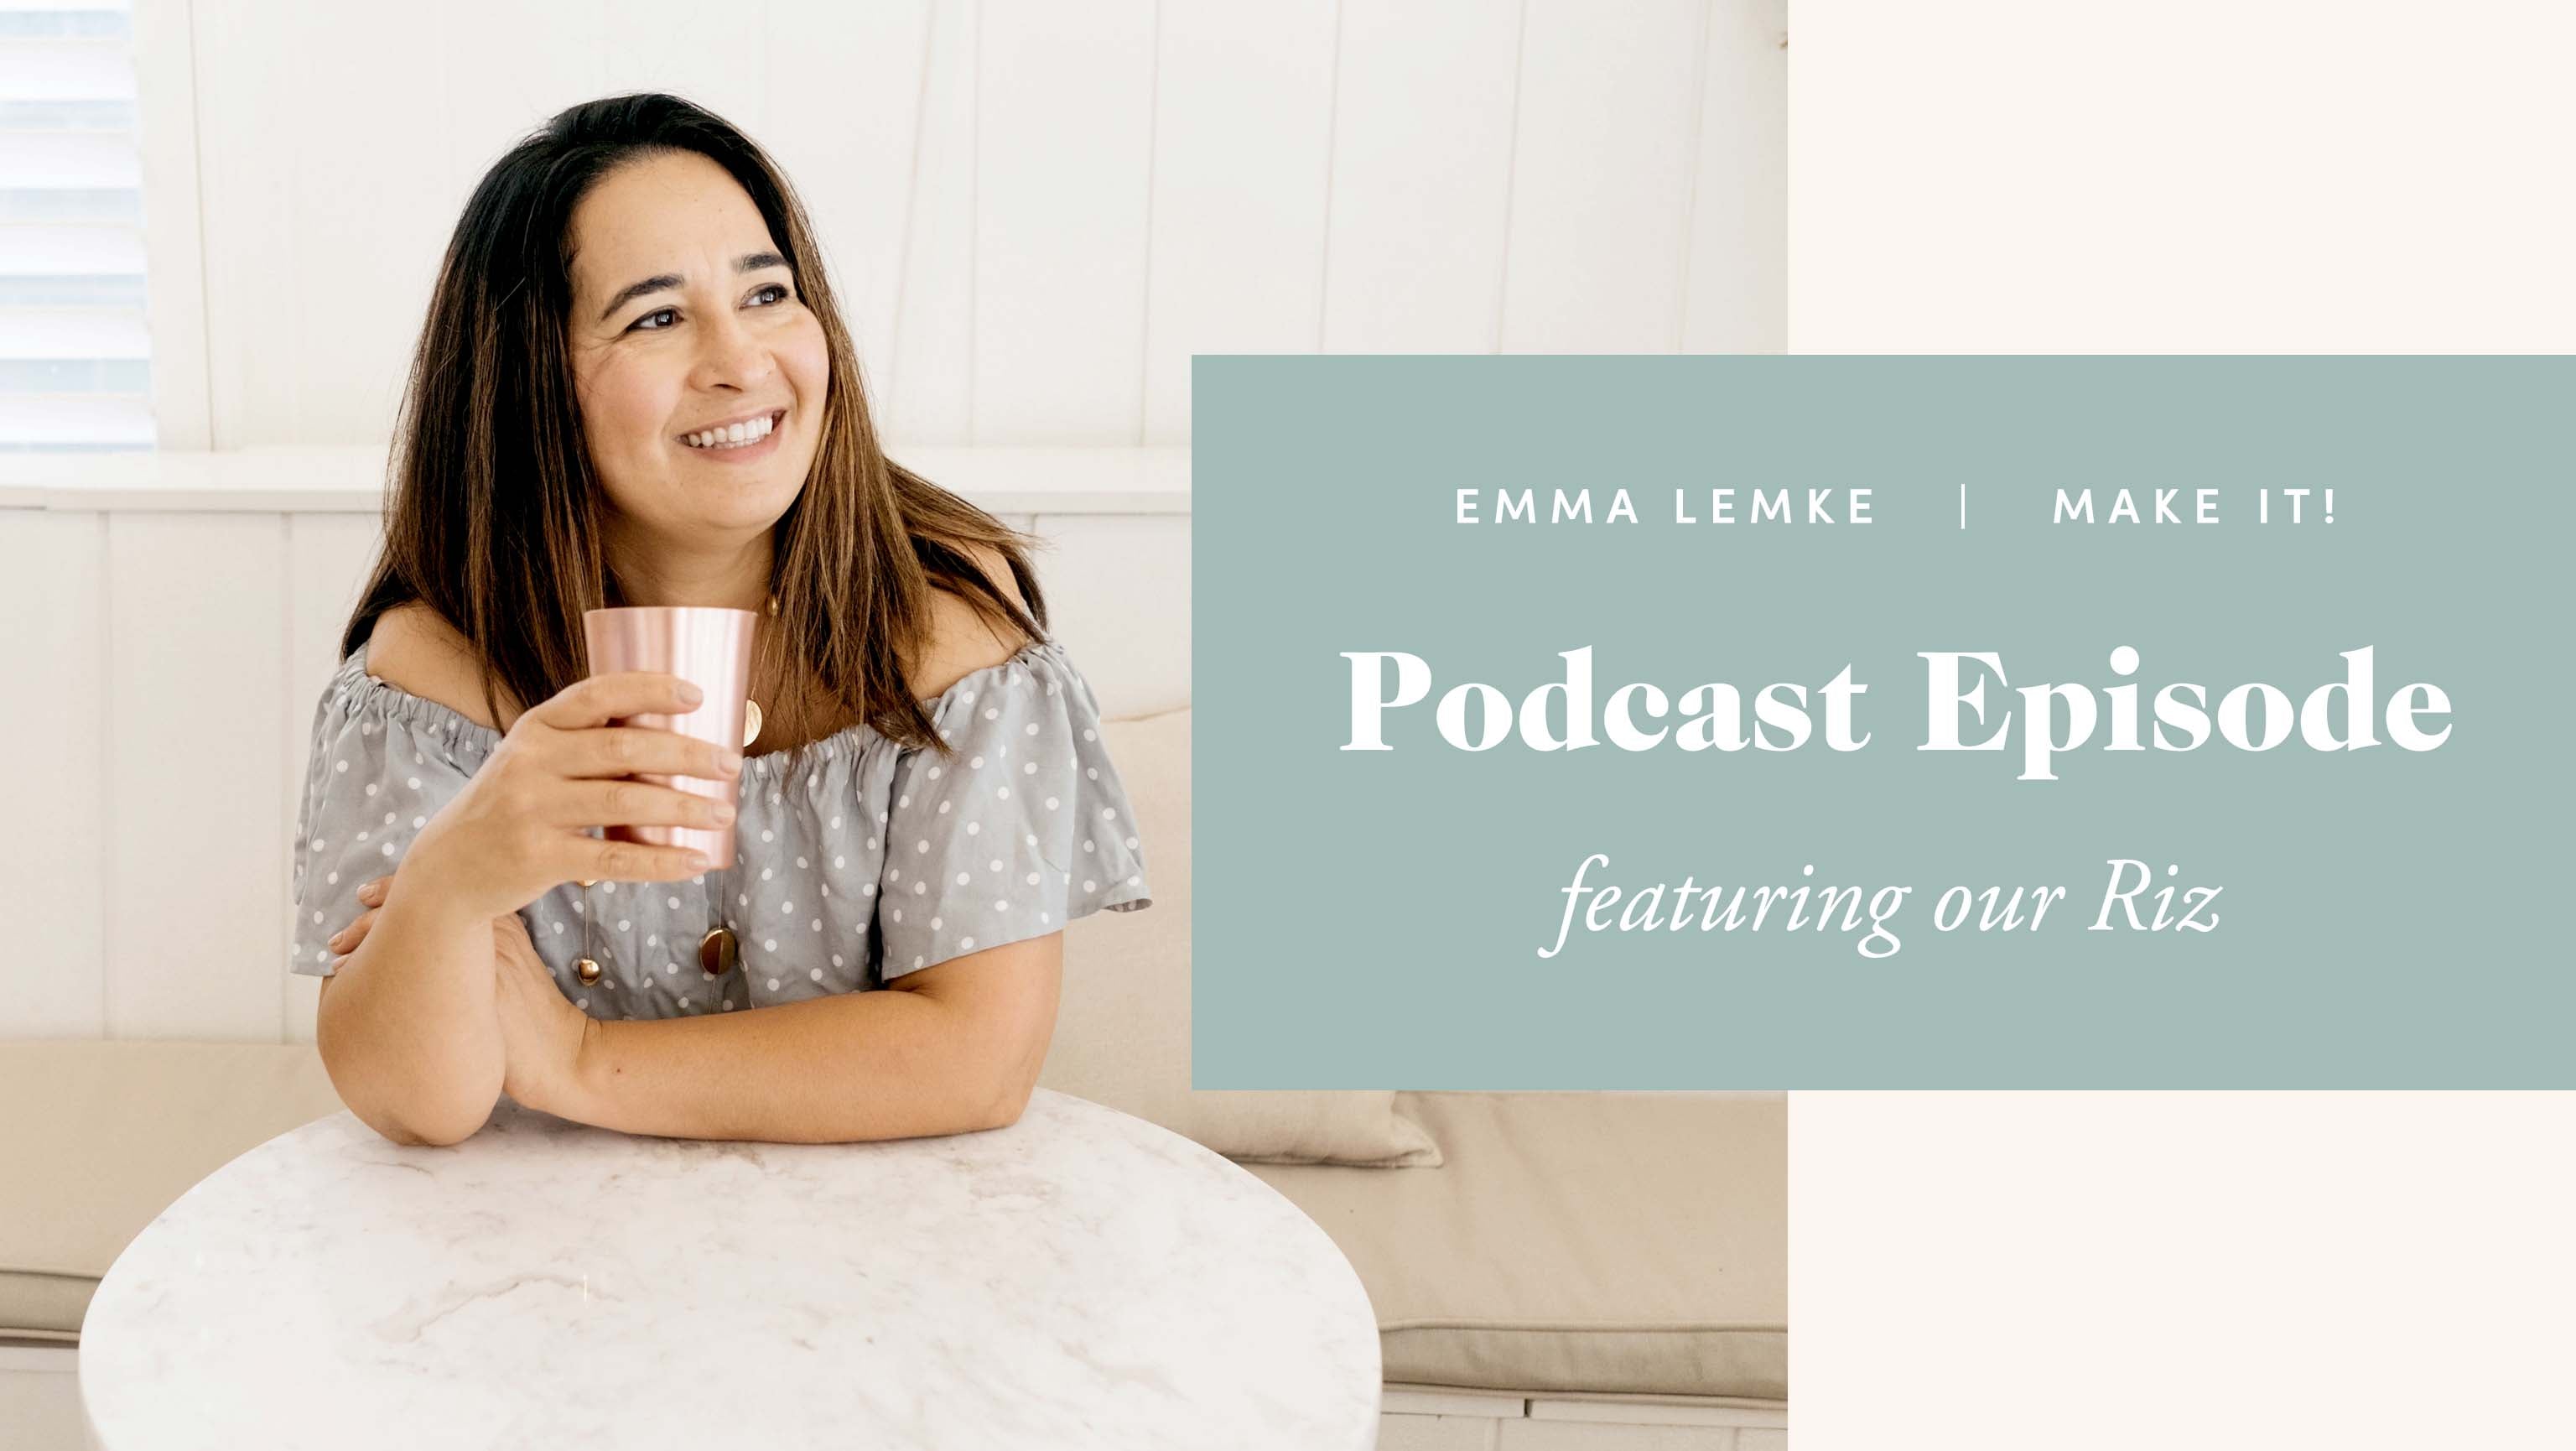 Emma Lemke Podcast "Make It!" featuring Riz McDonald